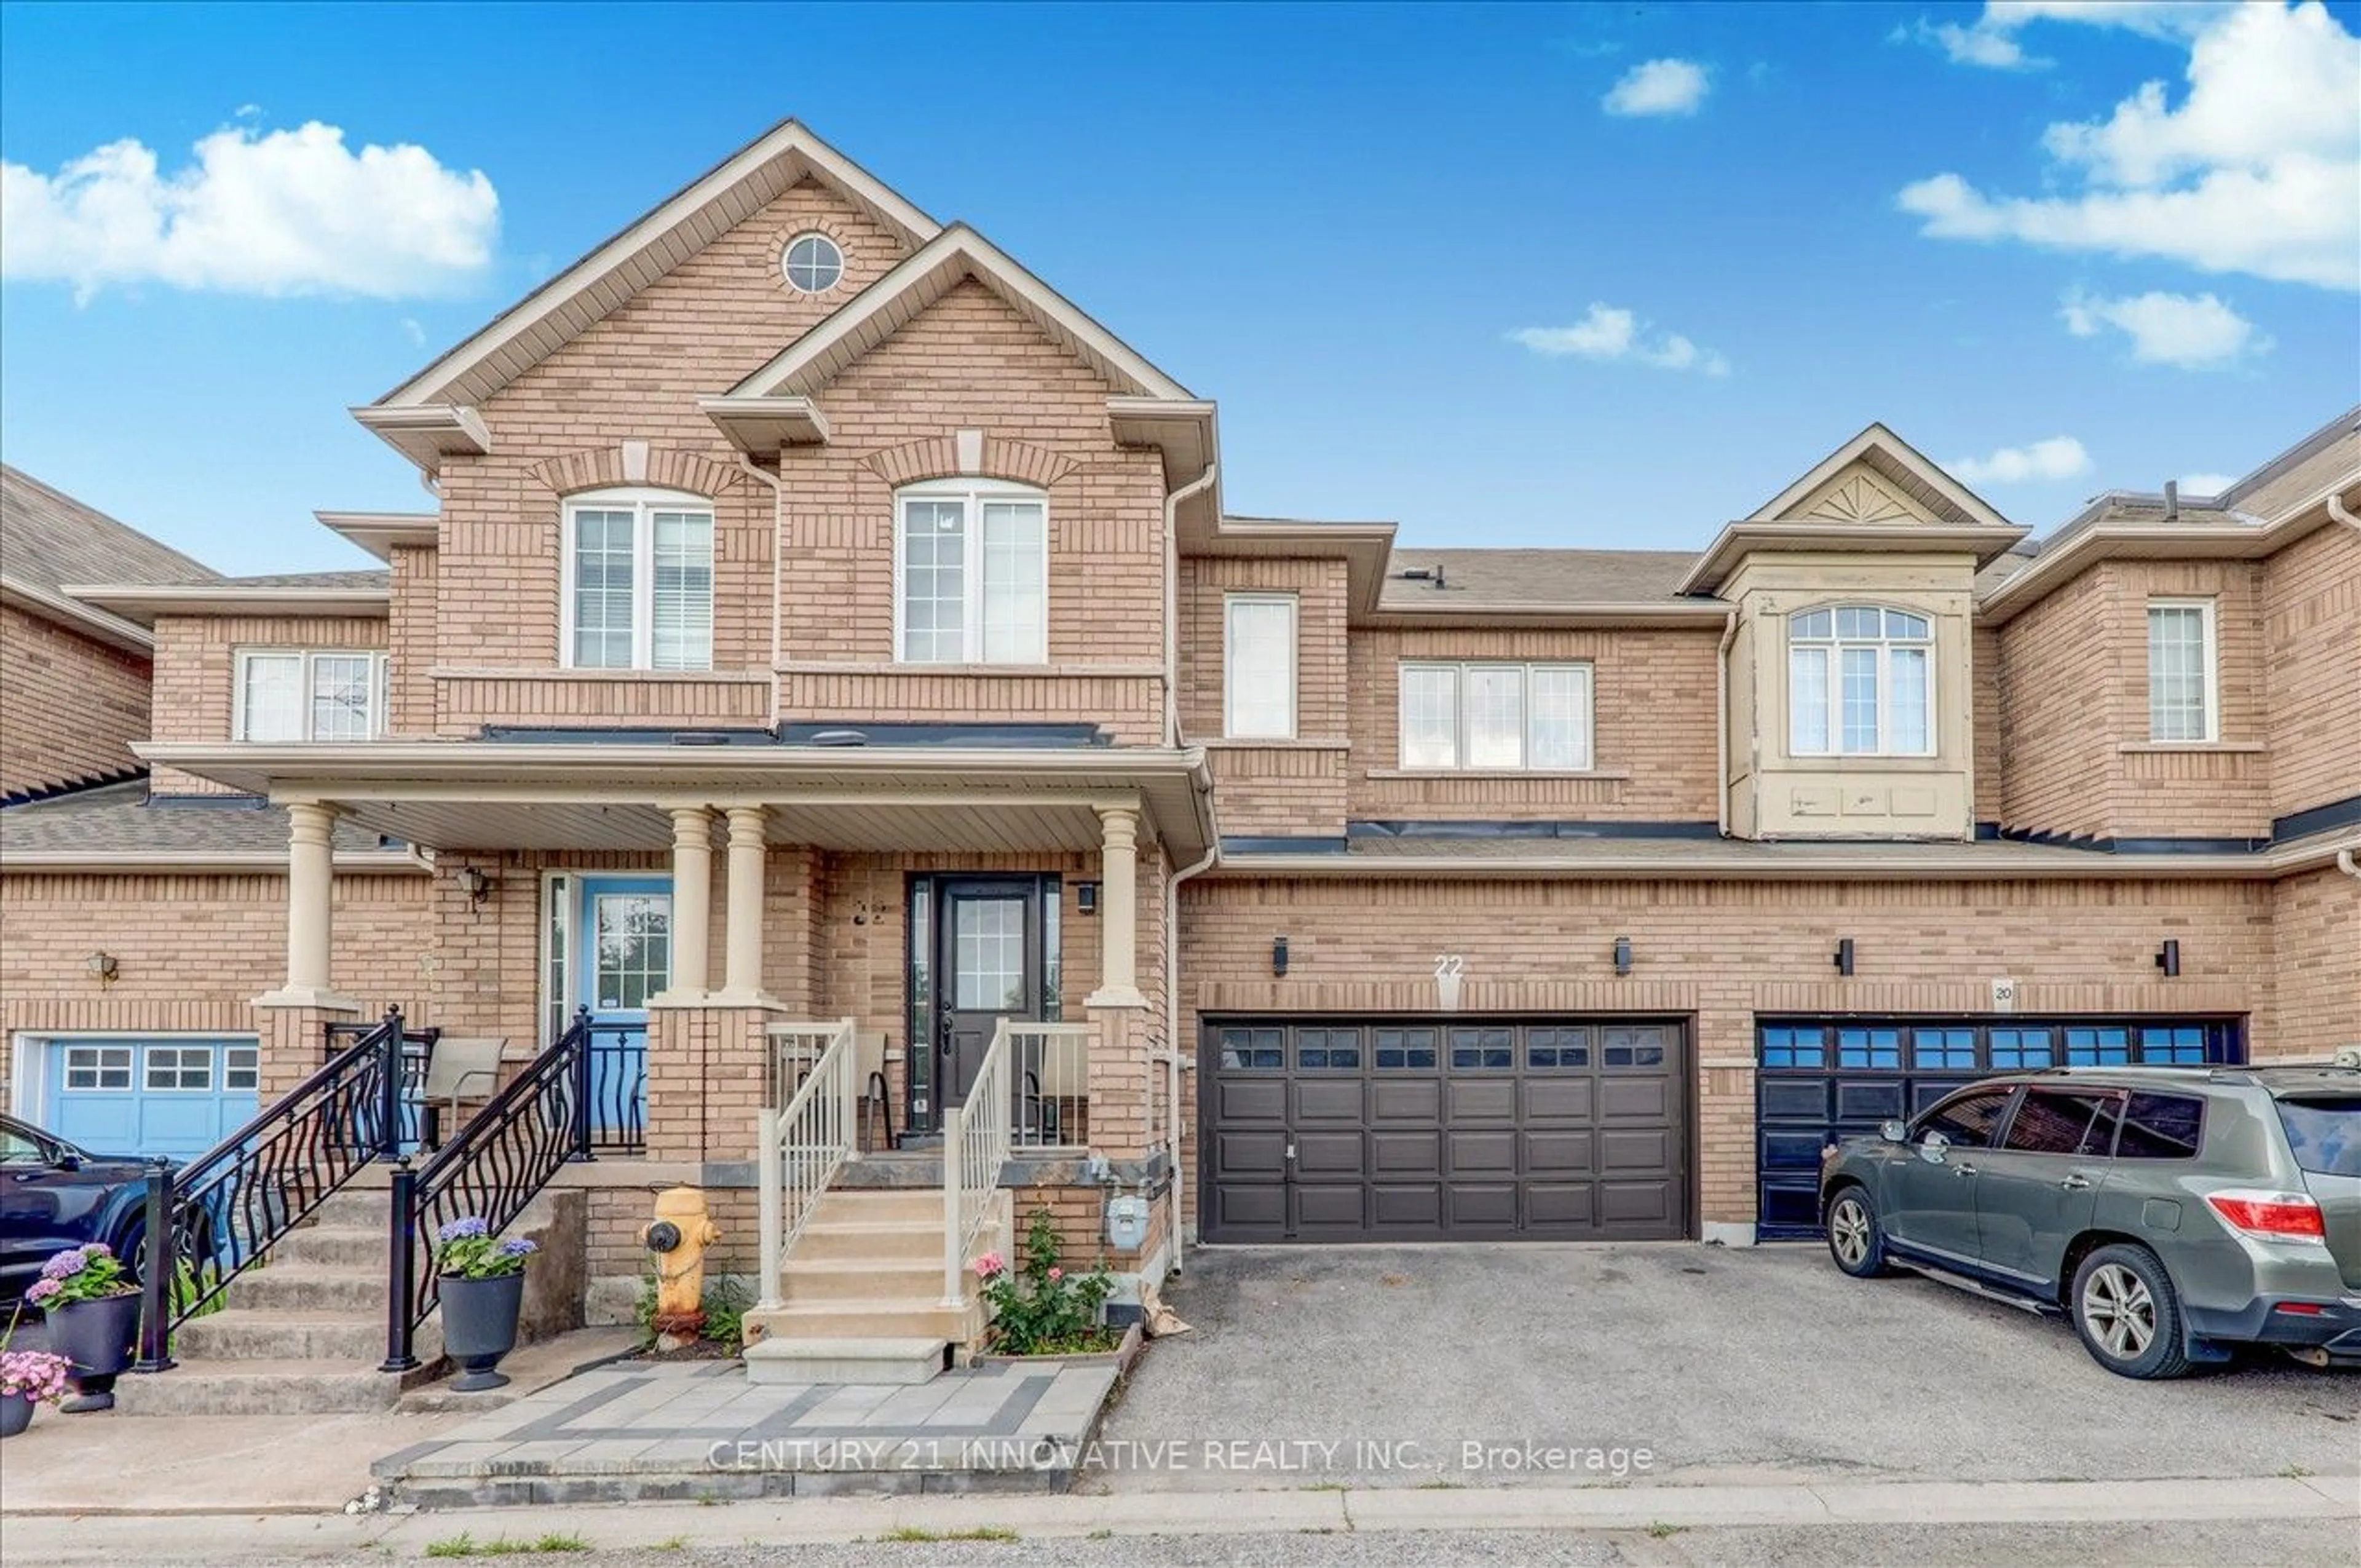 Home with brick exterior material for 22 Culver Lane, Toronto Ontario M1X 2E2